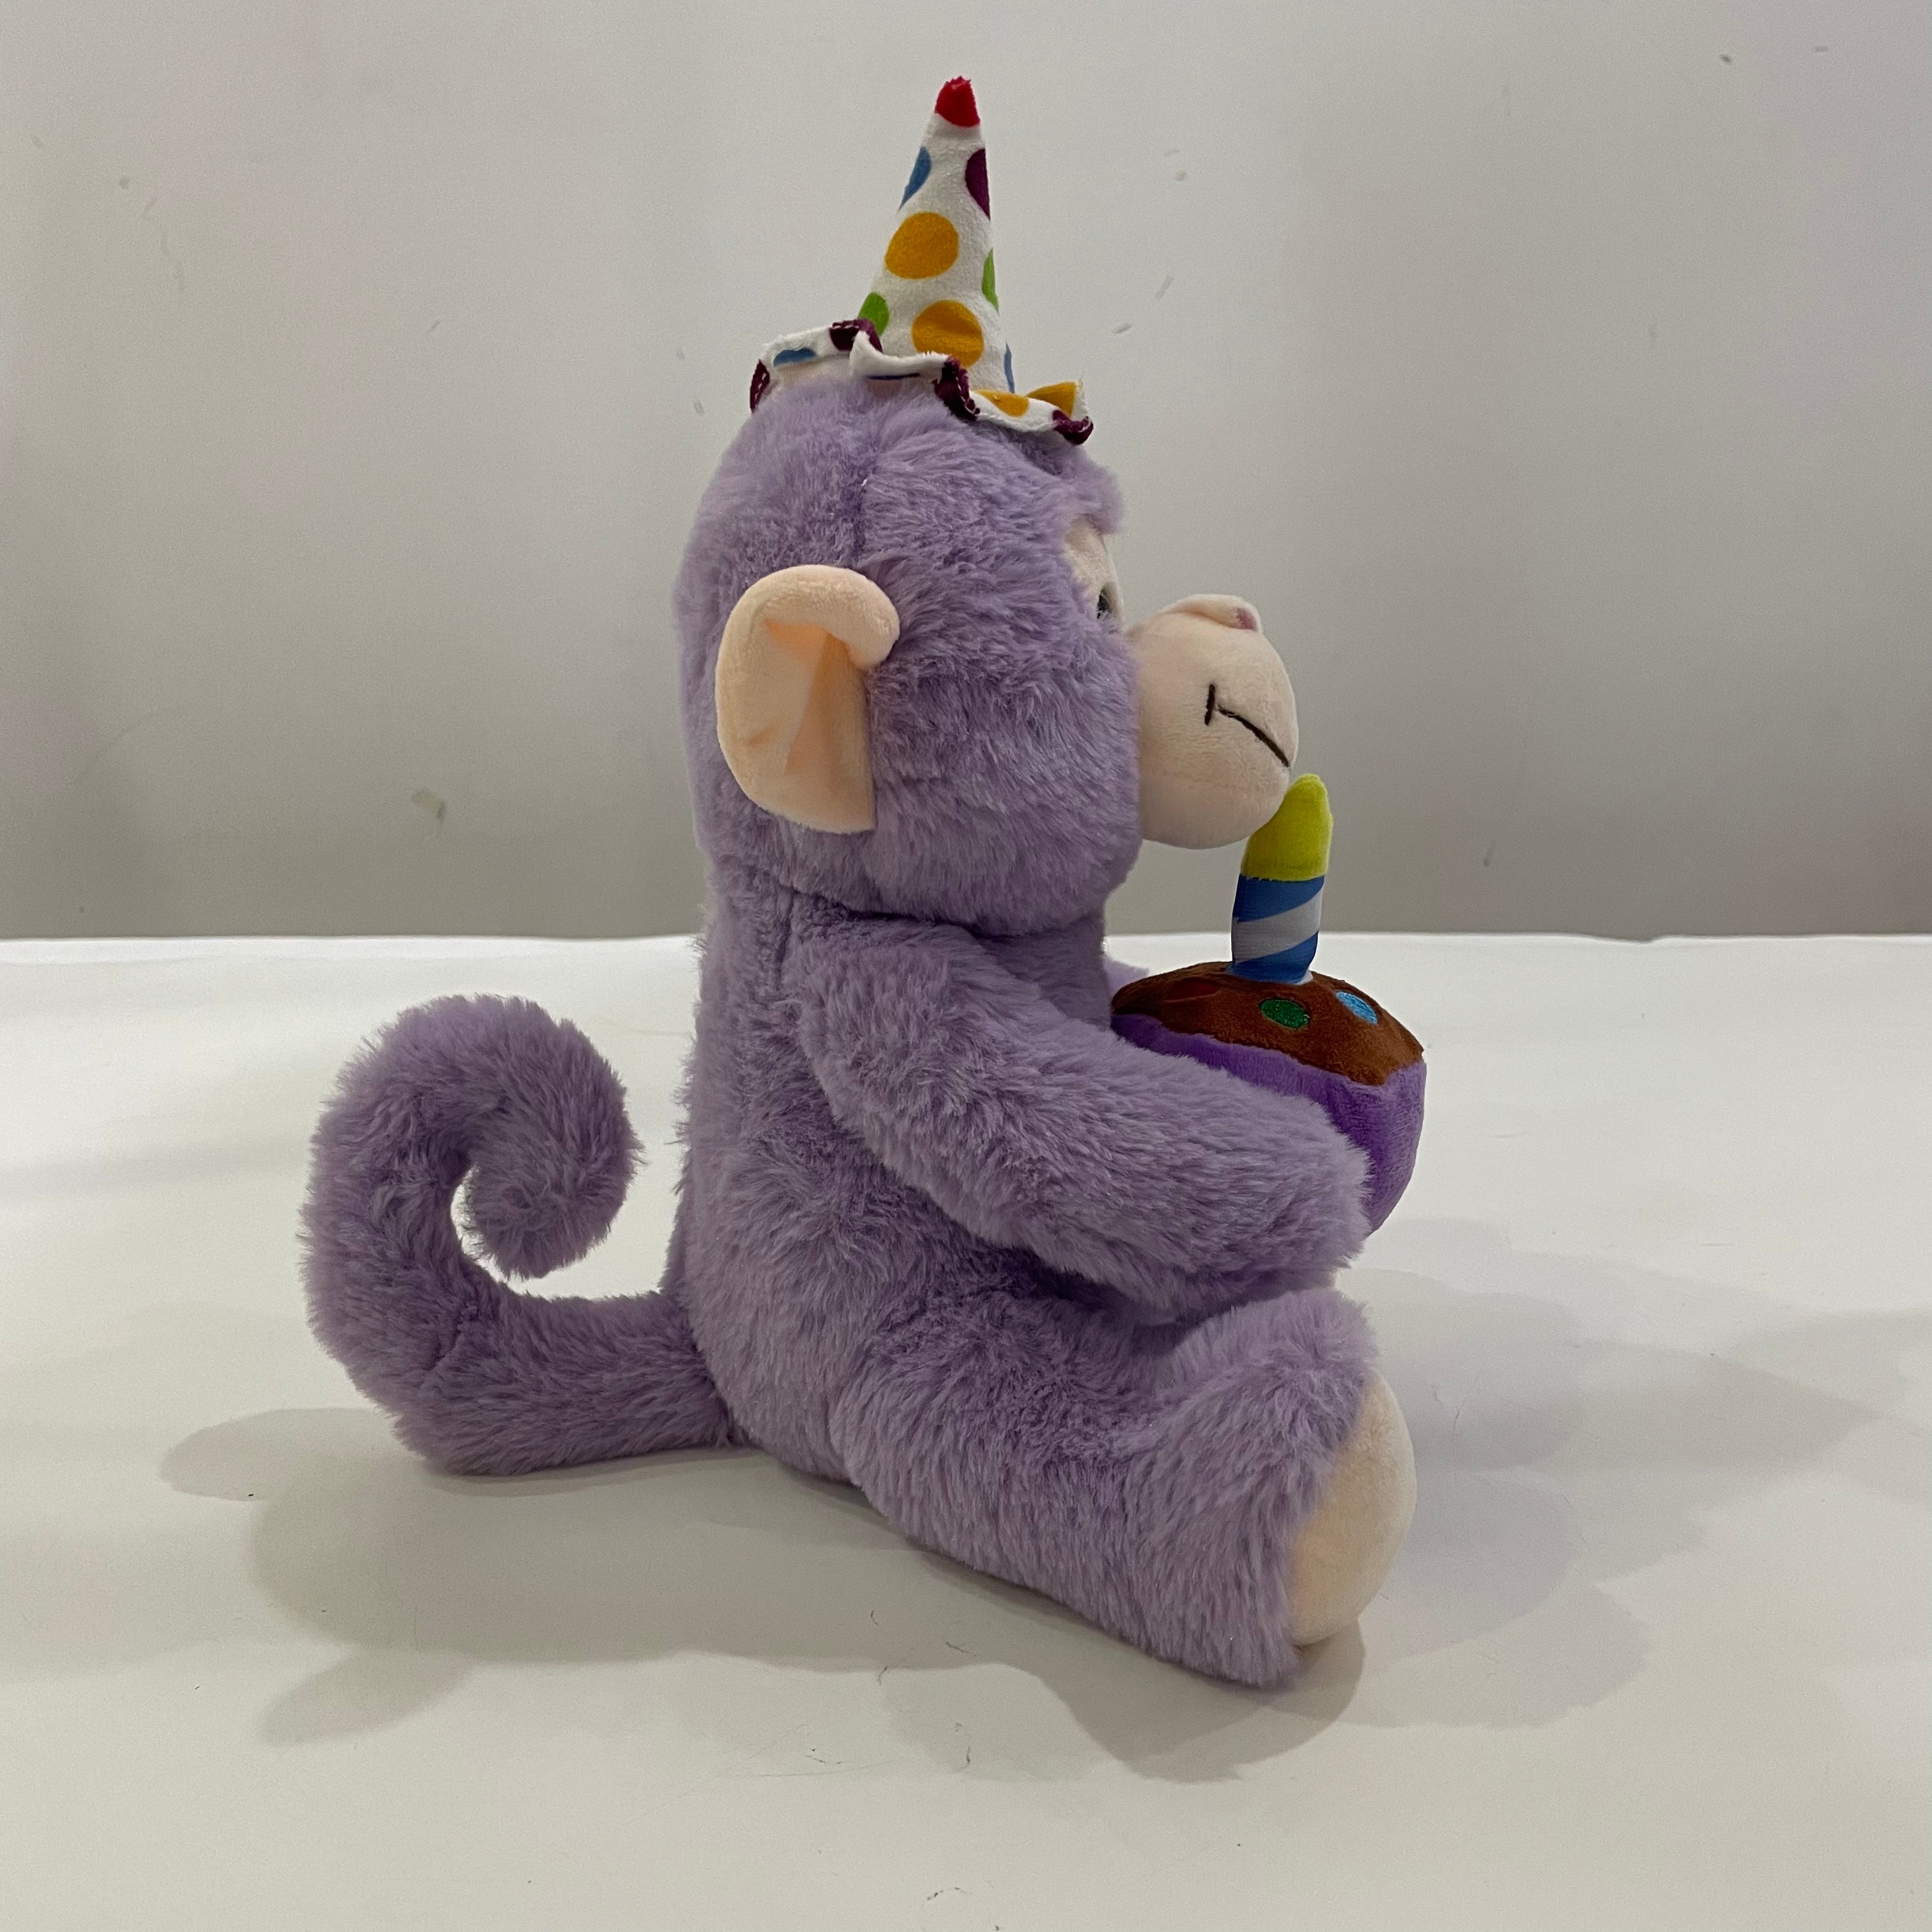 Happy Birthday Monkey Interactive Animated Stuffed Animal LED Singing Musical Plush Electric Toy